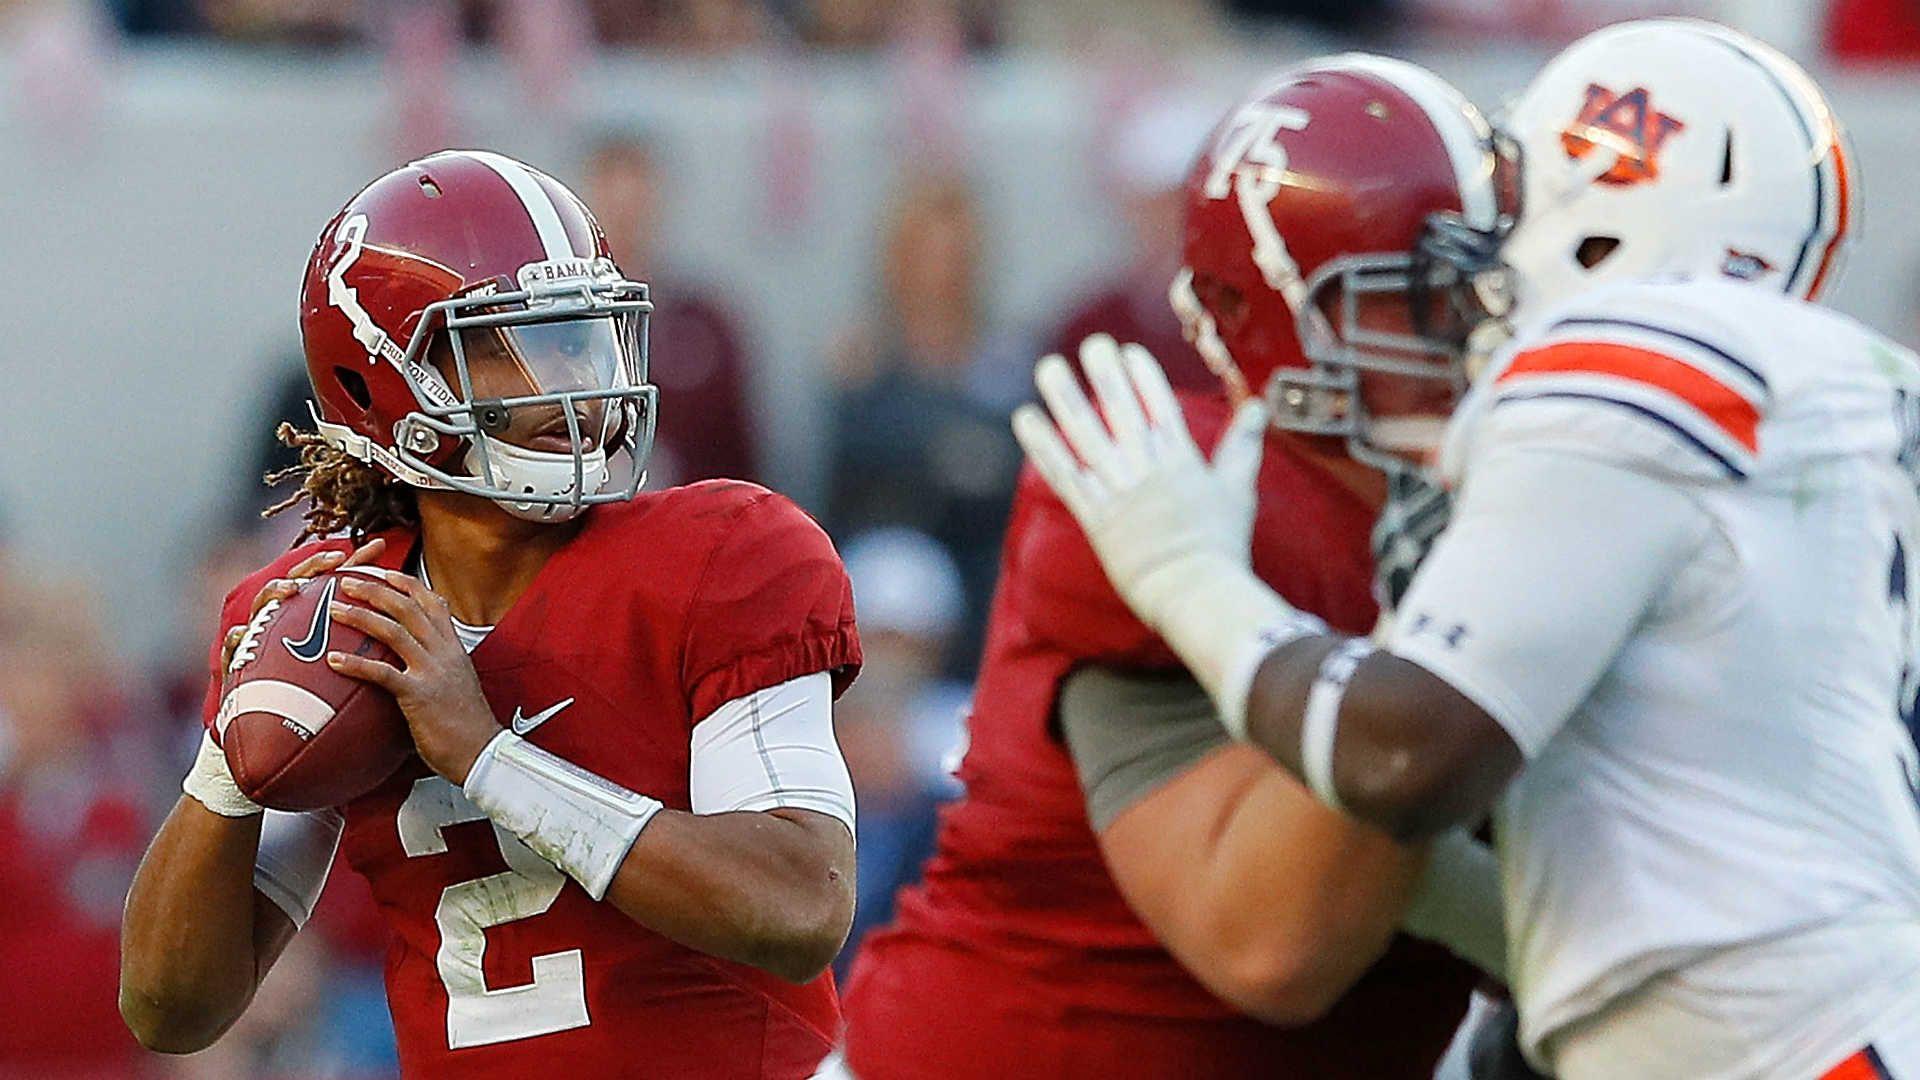 Kirk Herbstreit thinks Alabama's Jalen Hurts, Auburn's defense key